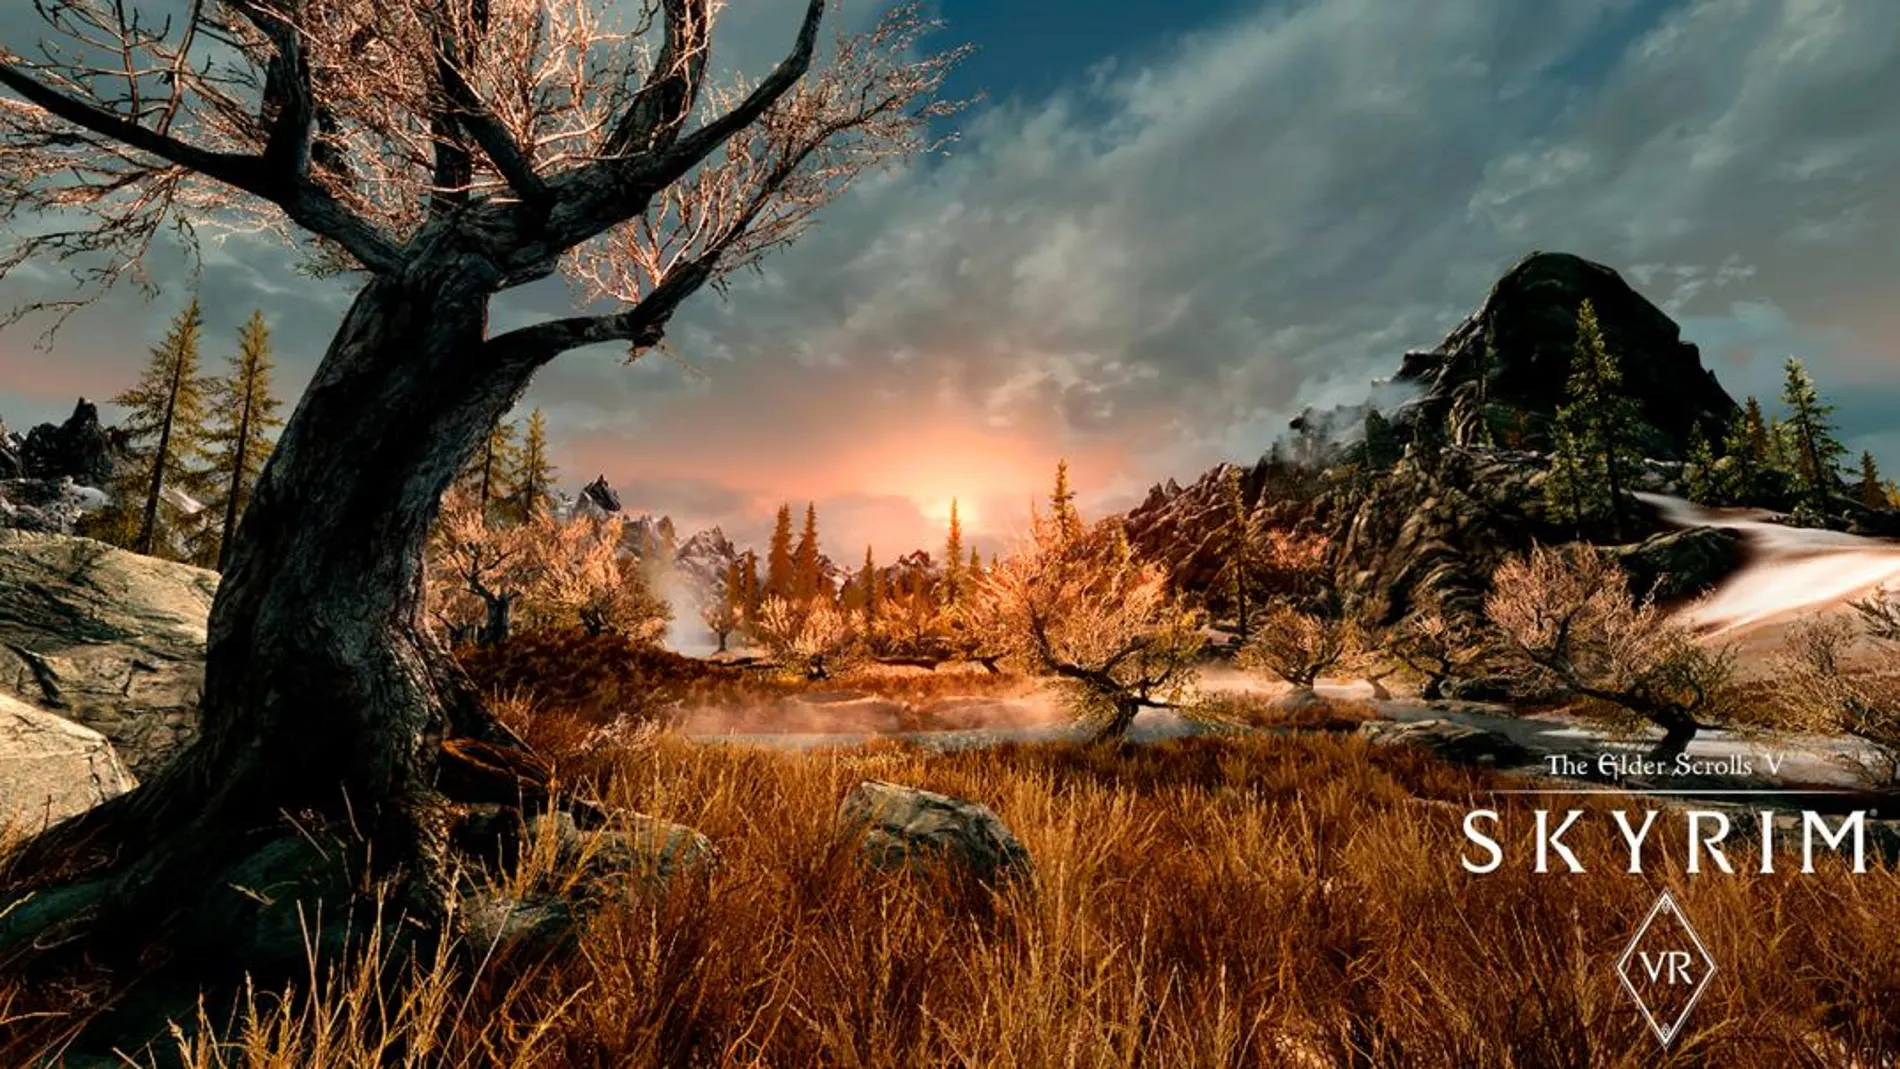 La fantasía épica The Elder Scrolls V: Skyrim VR llegará a PC